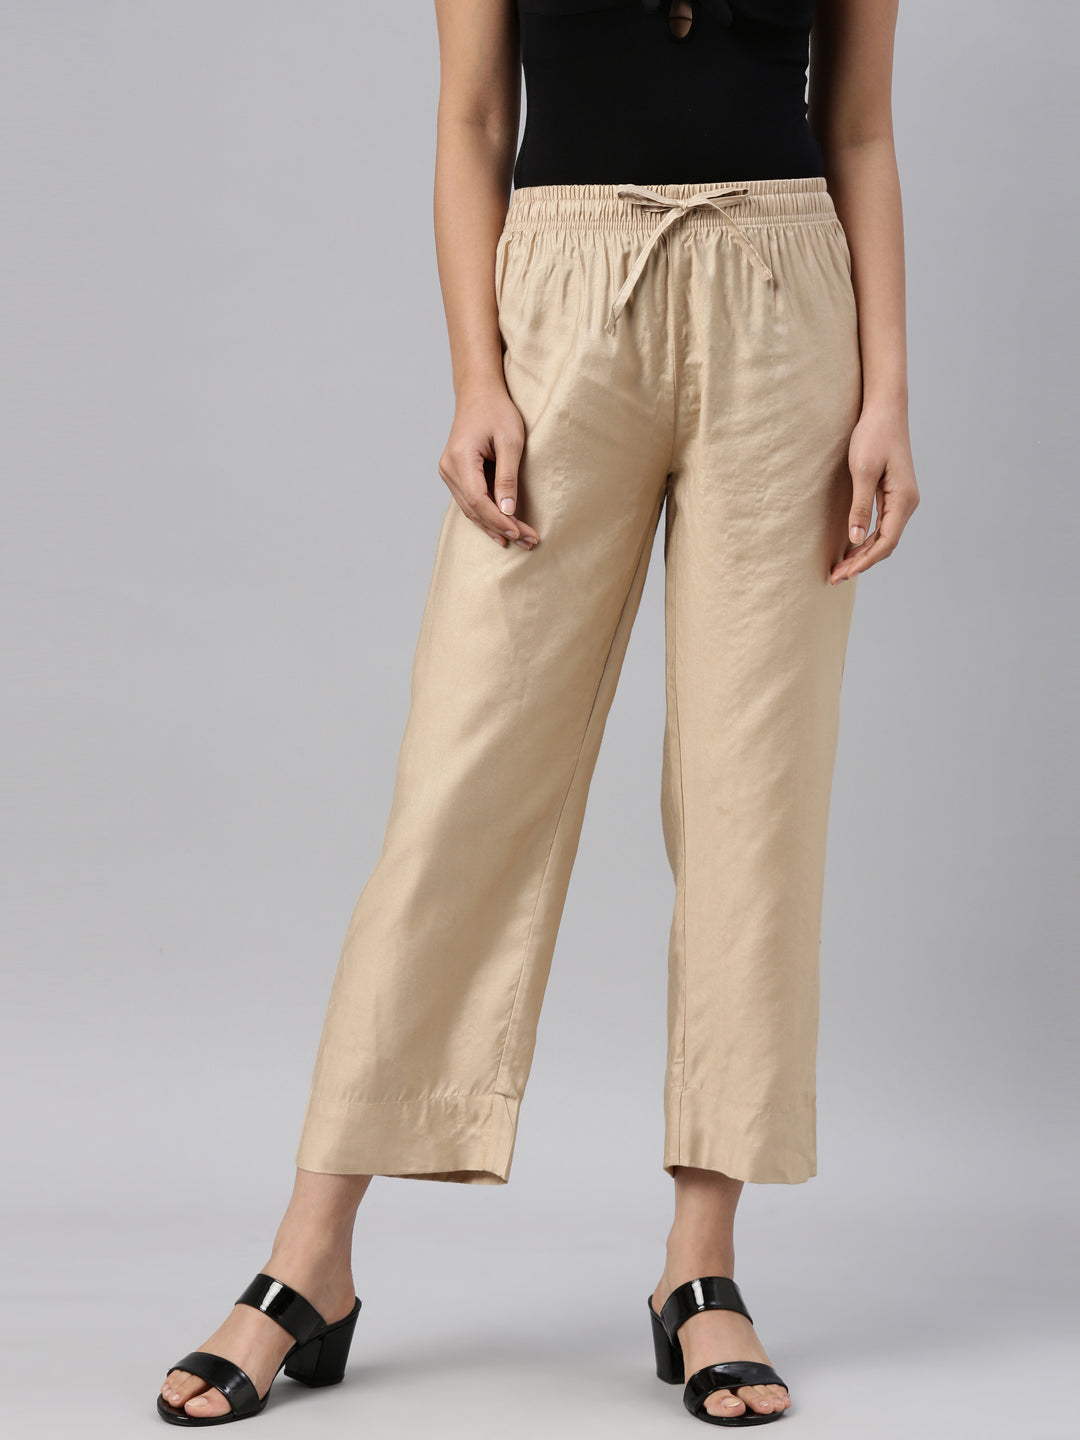 Buy Women's Gold Solid Mid-Rise Metallic Pants - GoColors